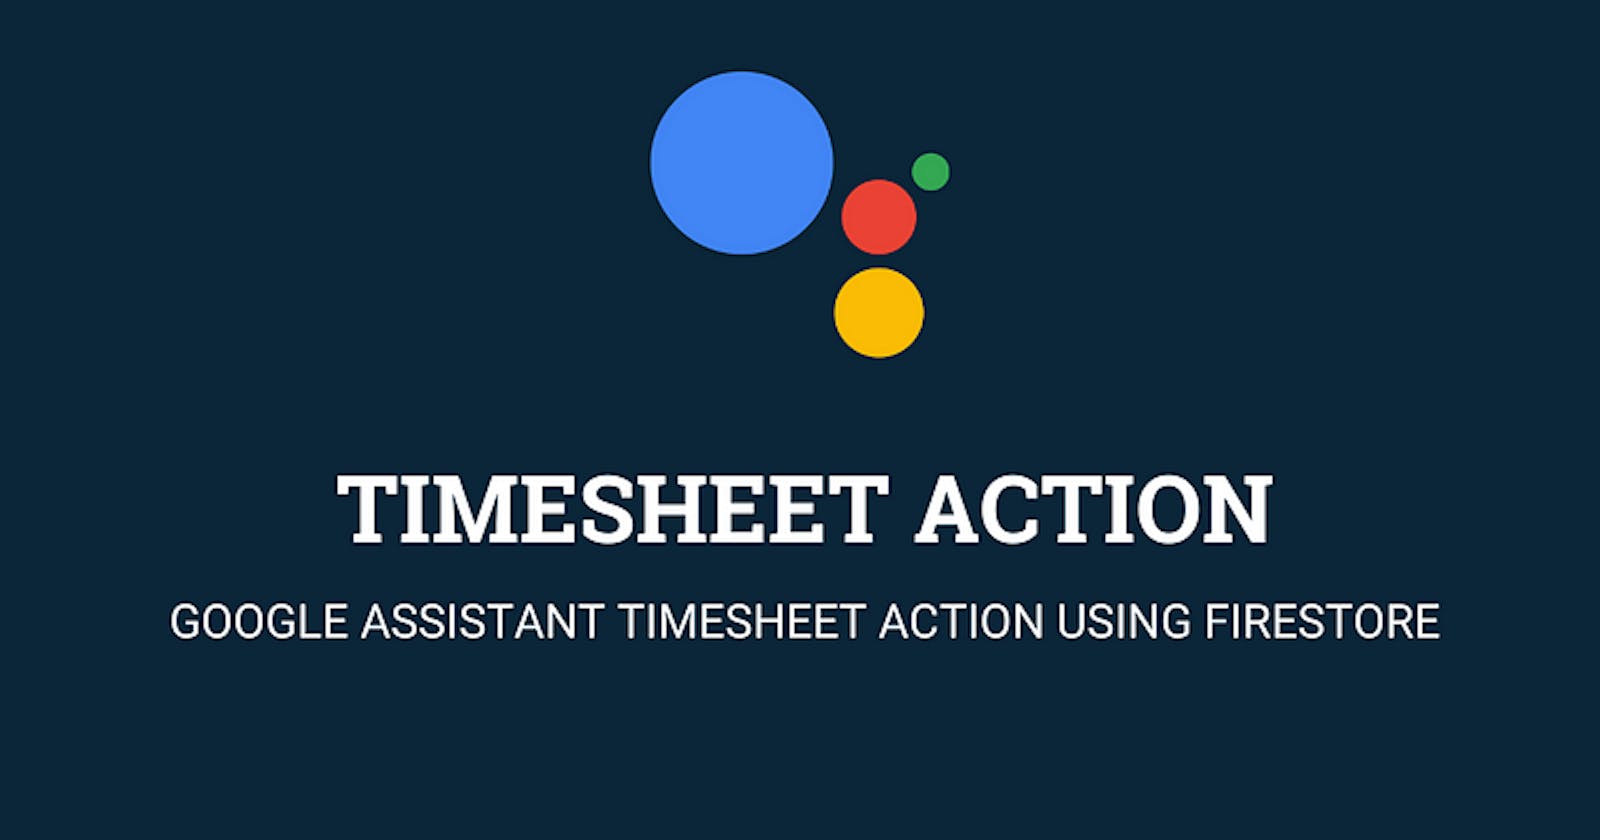 Google Assistant Timesheet Action using Firestore